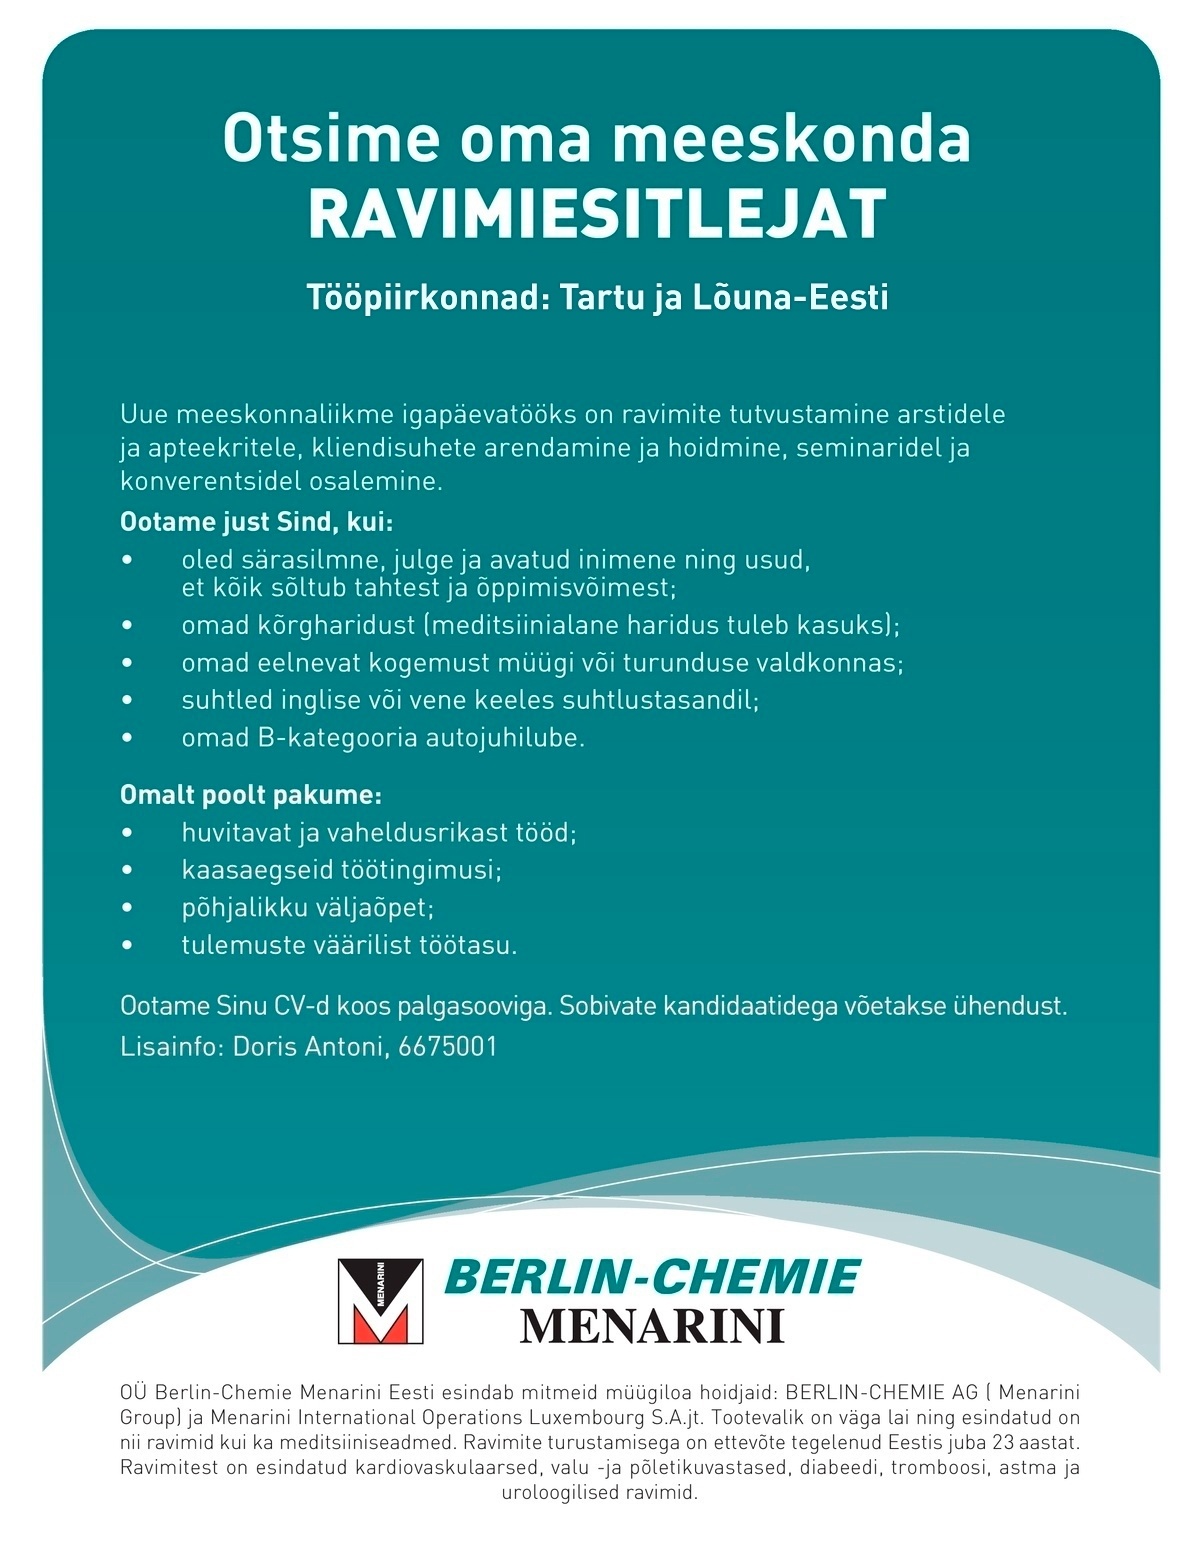 Berlin-Chemie Menarini Eesti OÜ Ravimiesitleja